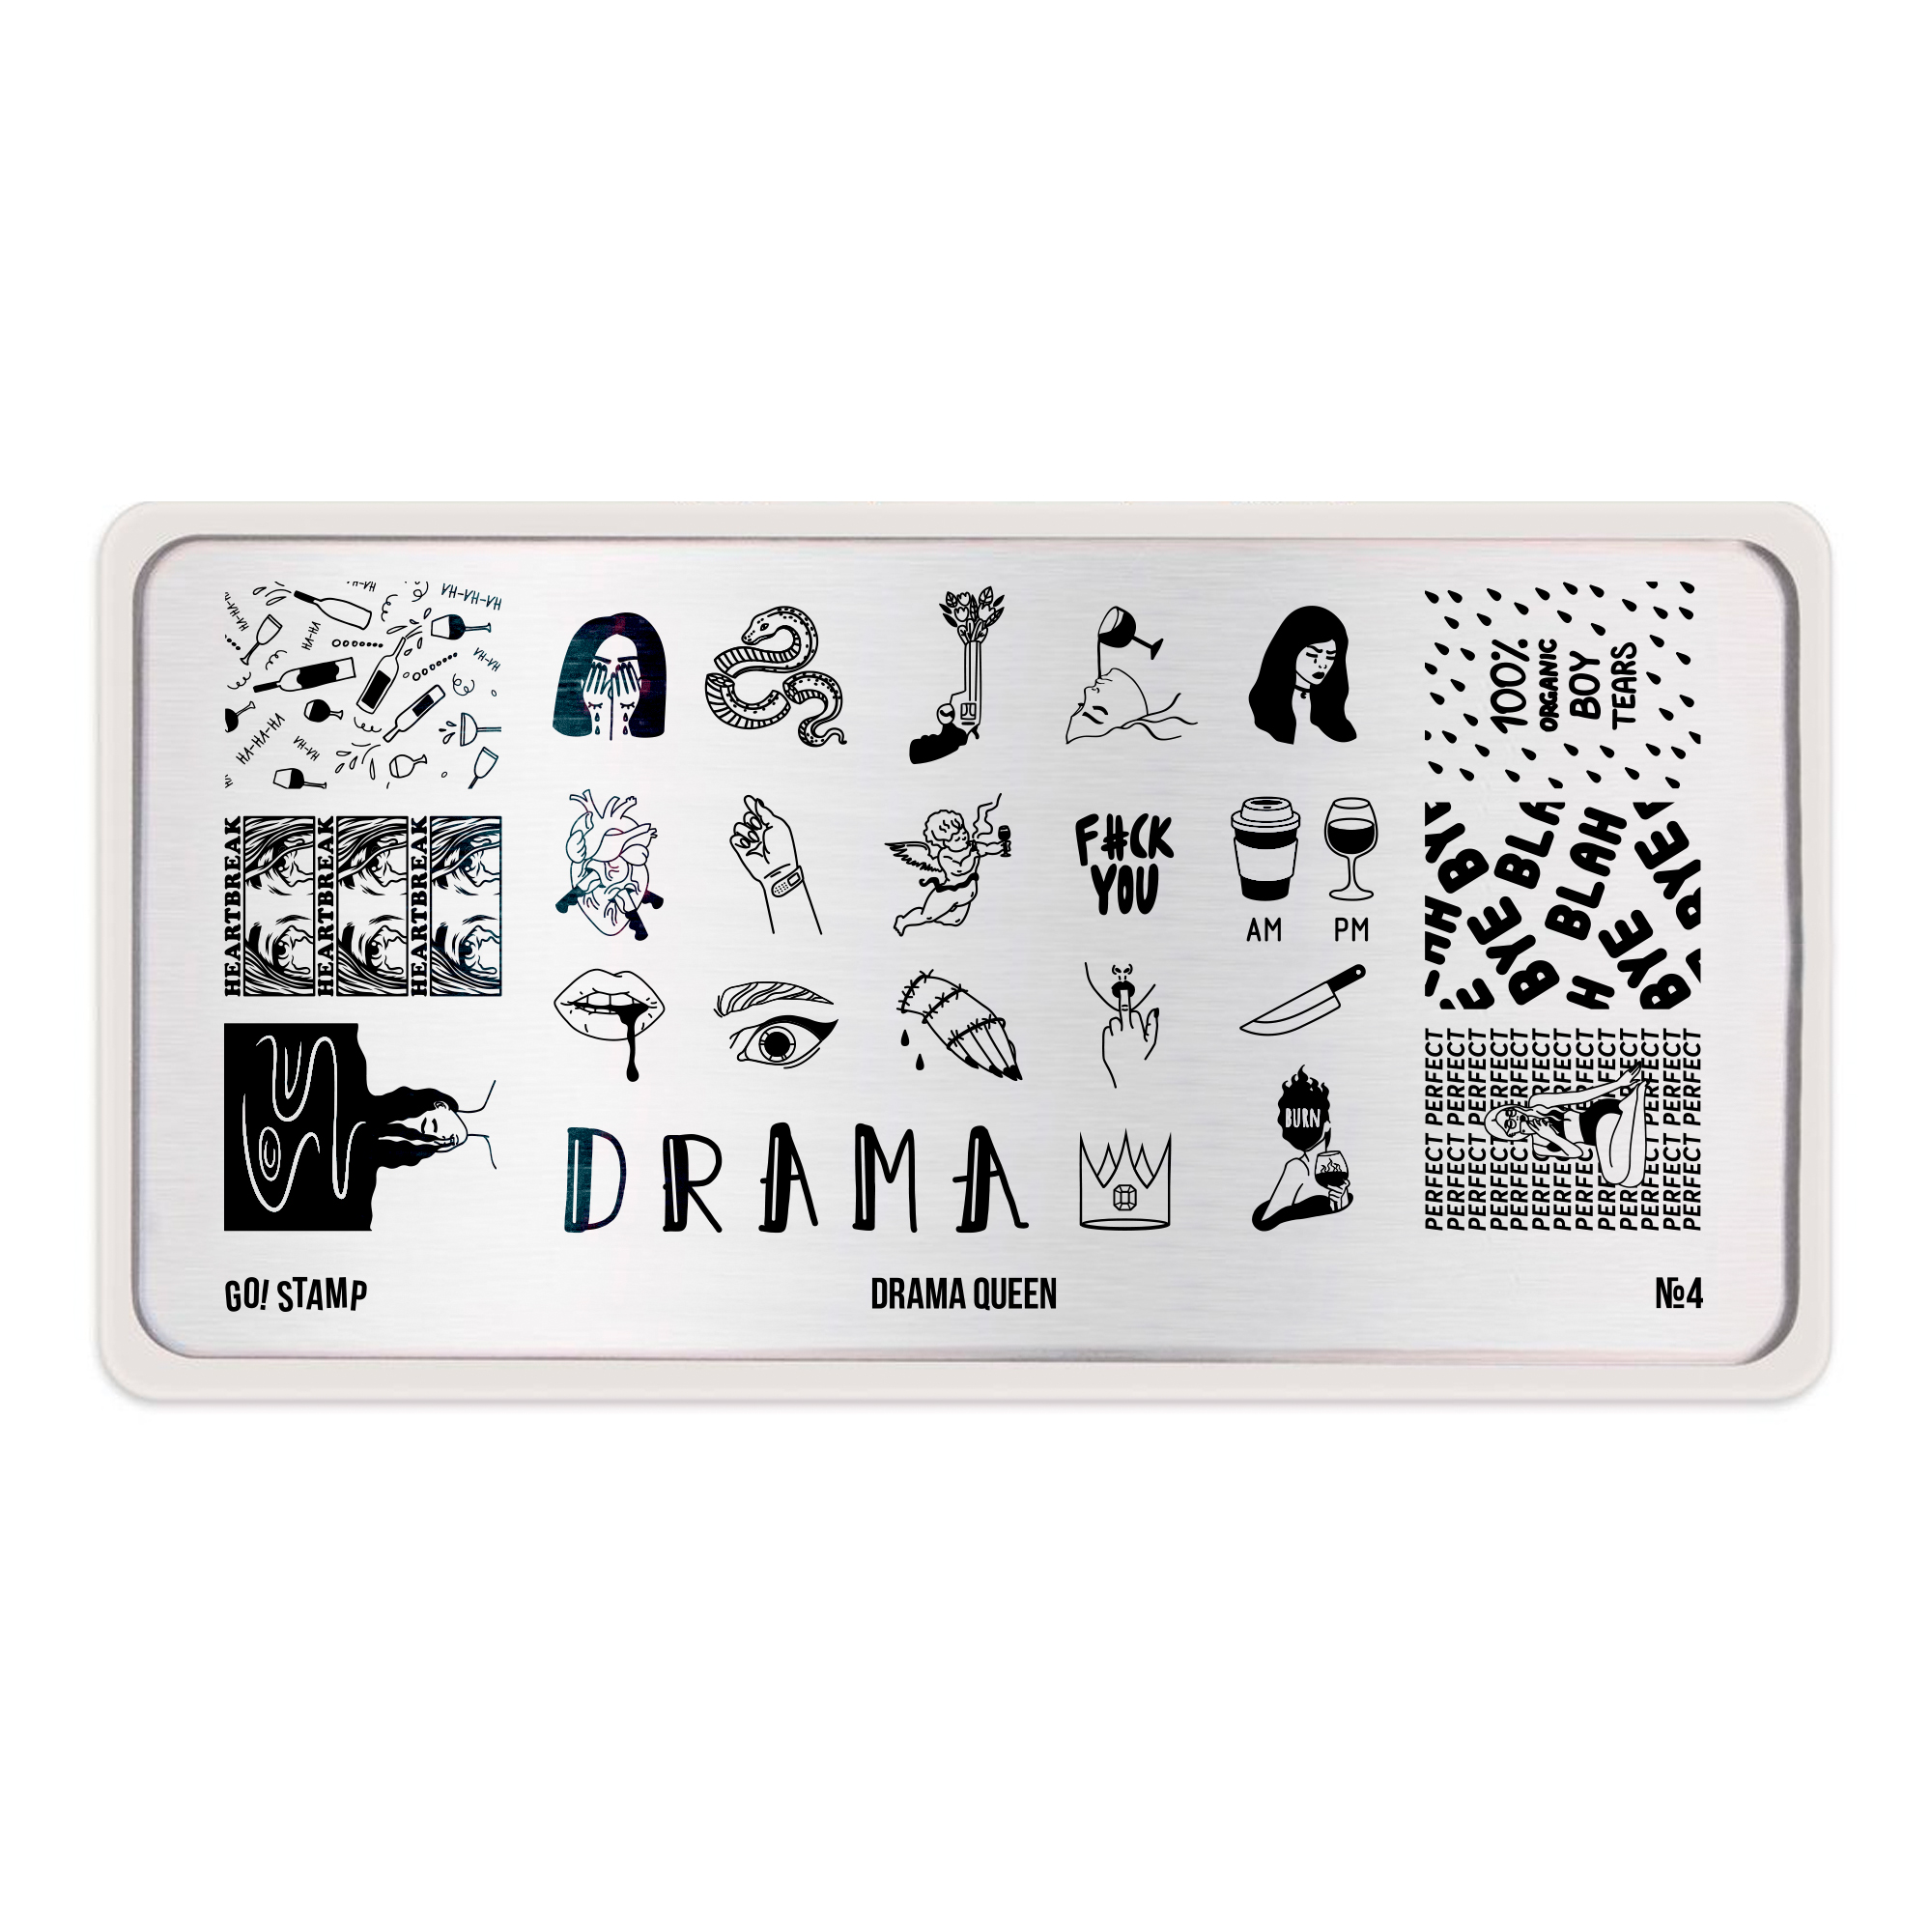 Go Stamp    04 Drama queen*